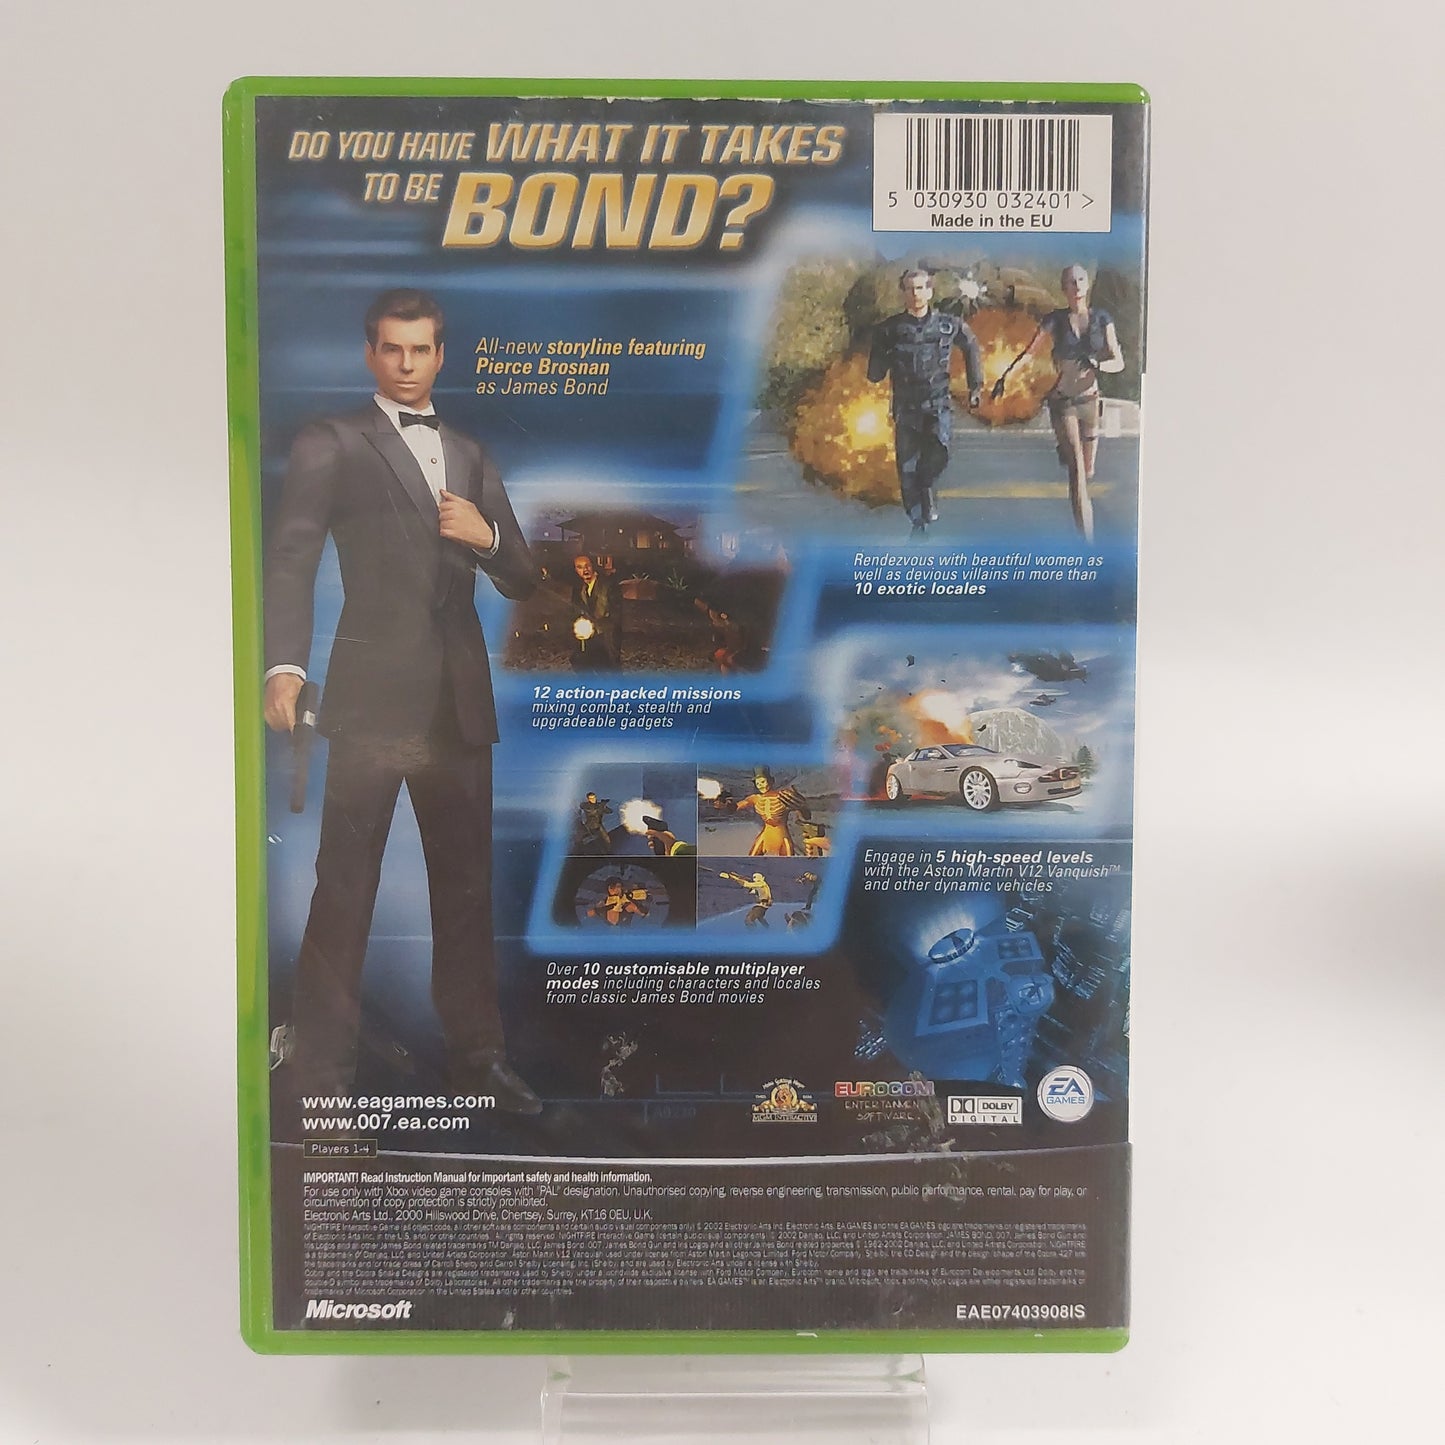 James Bond 007: Nightfire Xbox Original